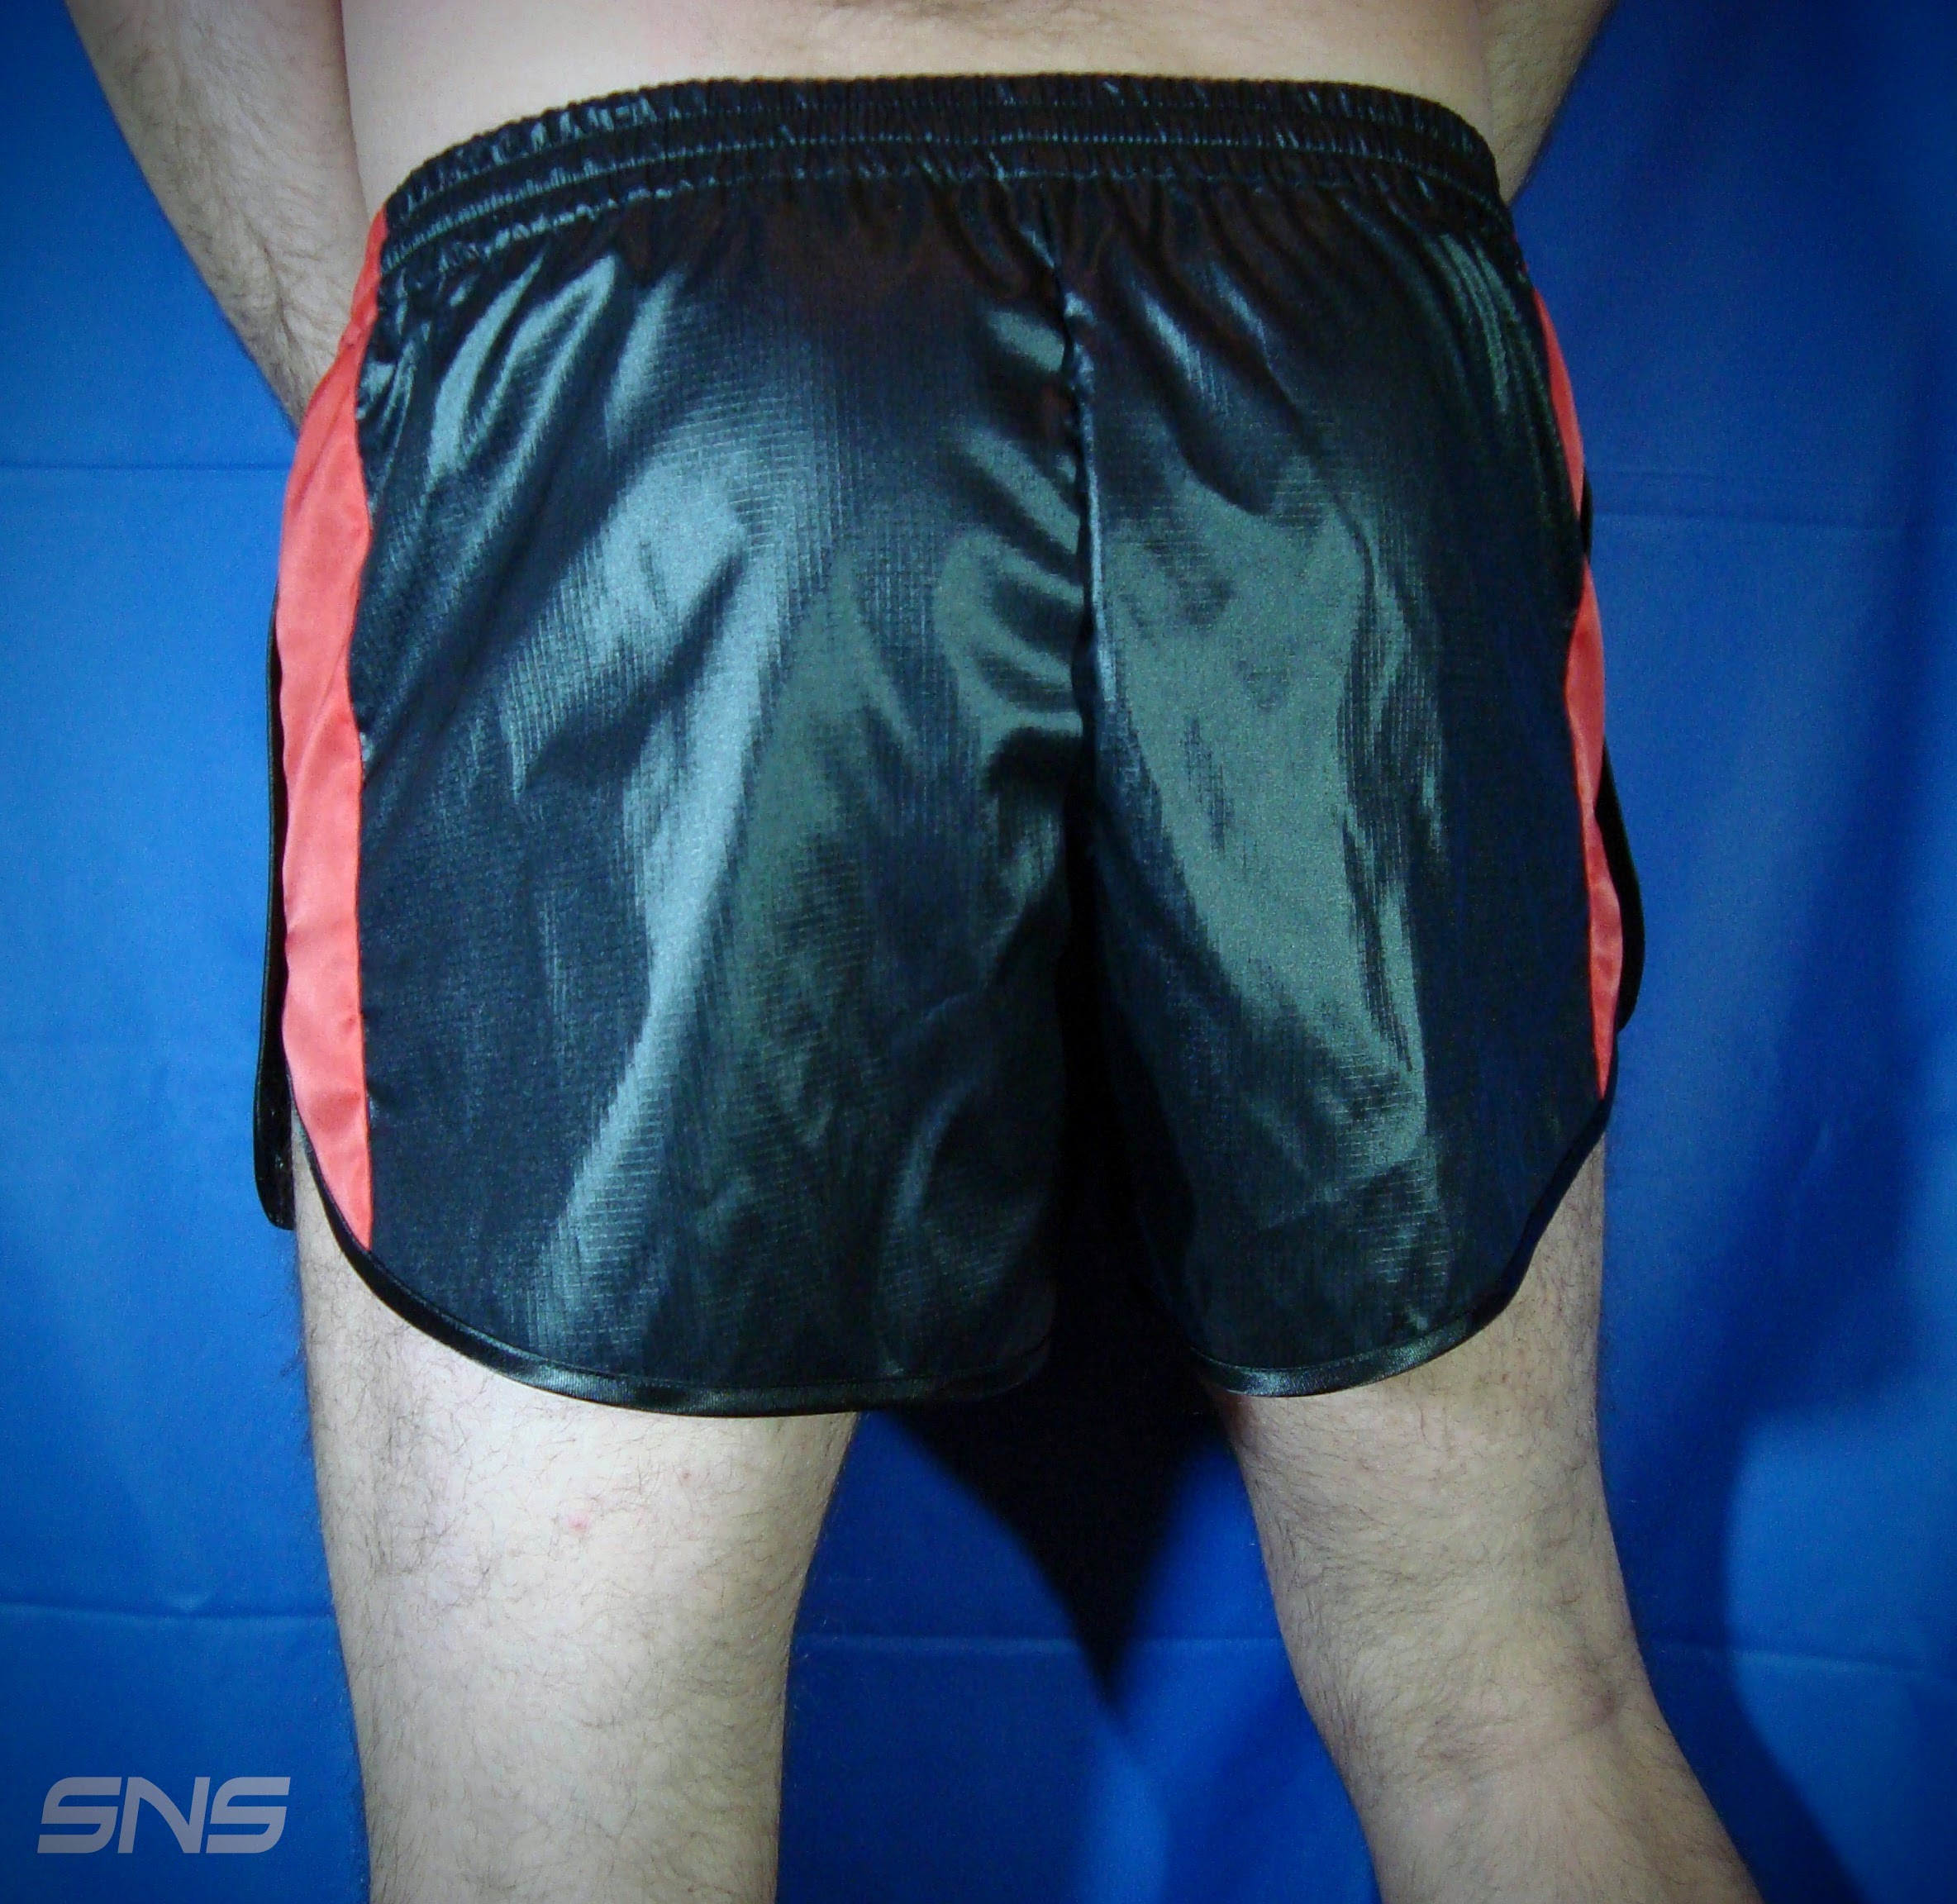 SNS Black Red Nylon Shorts